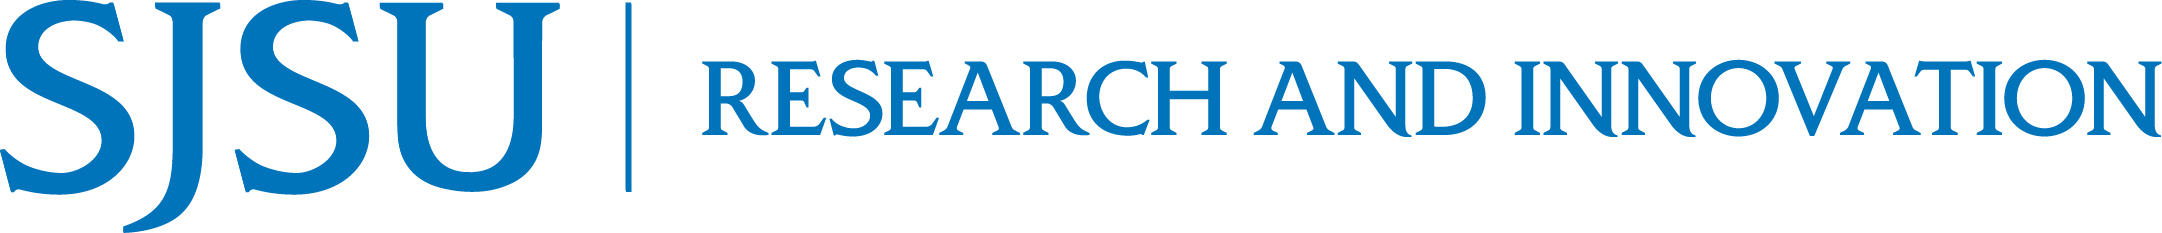 research logo